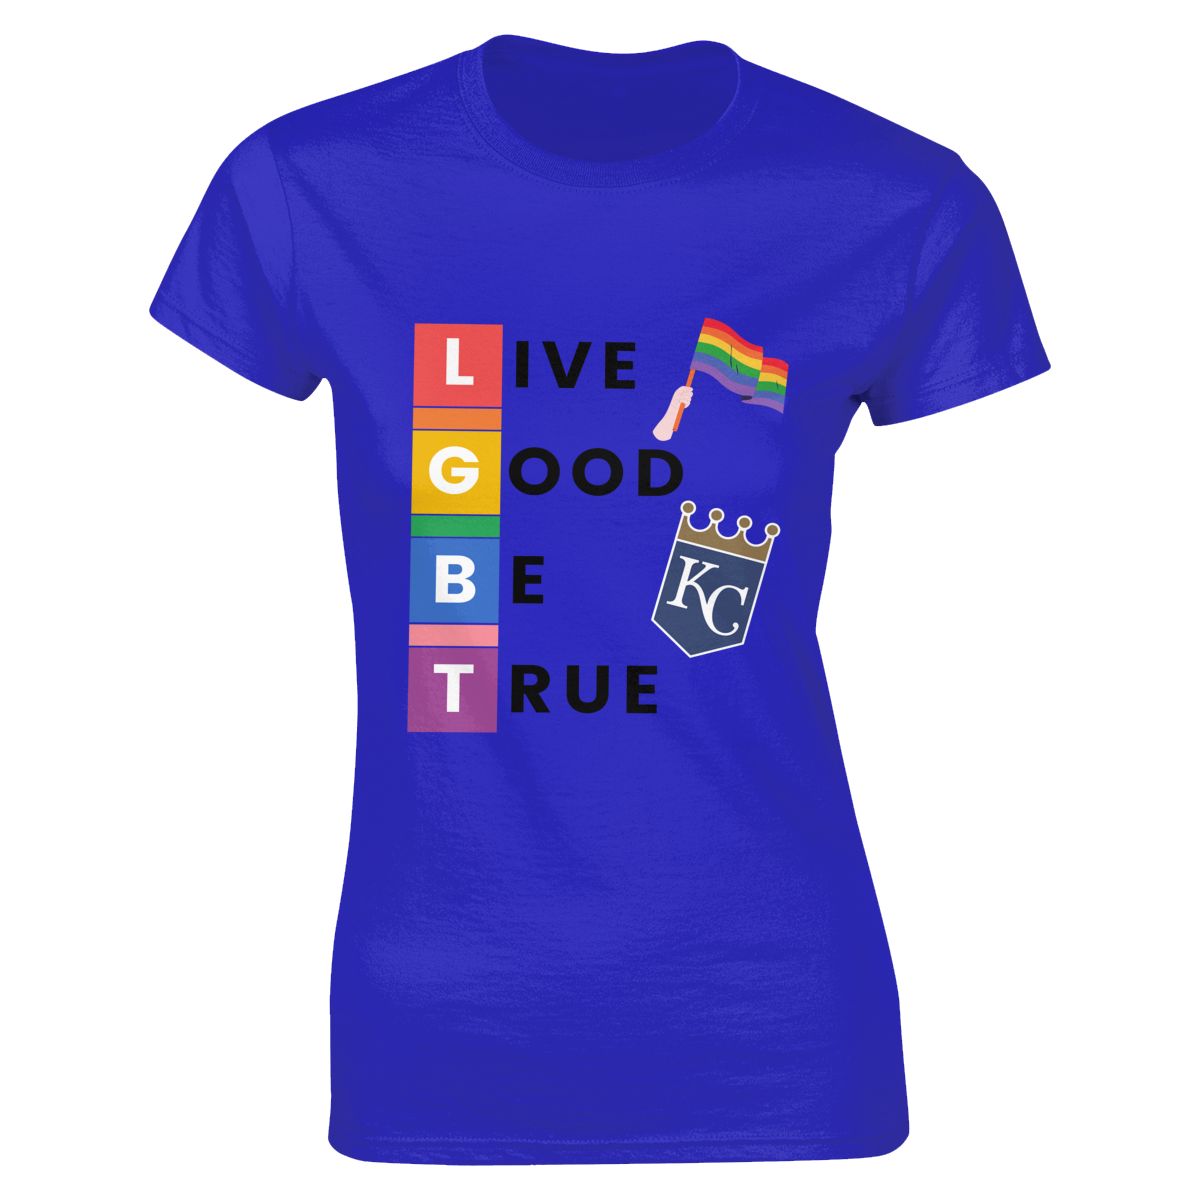 Kansas City Royals LGBT Pride Women's Crewneck T-Shirt